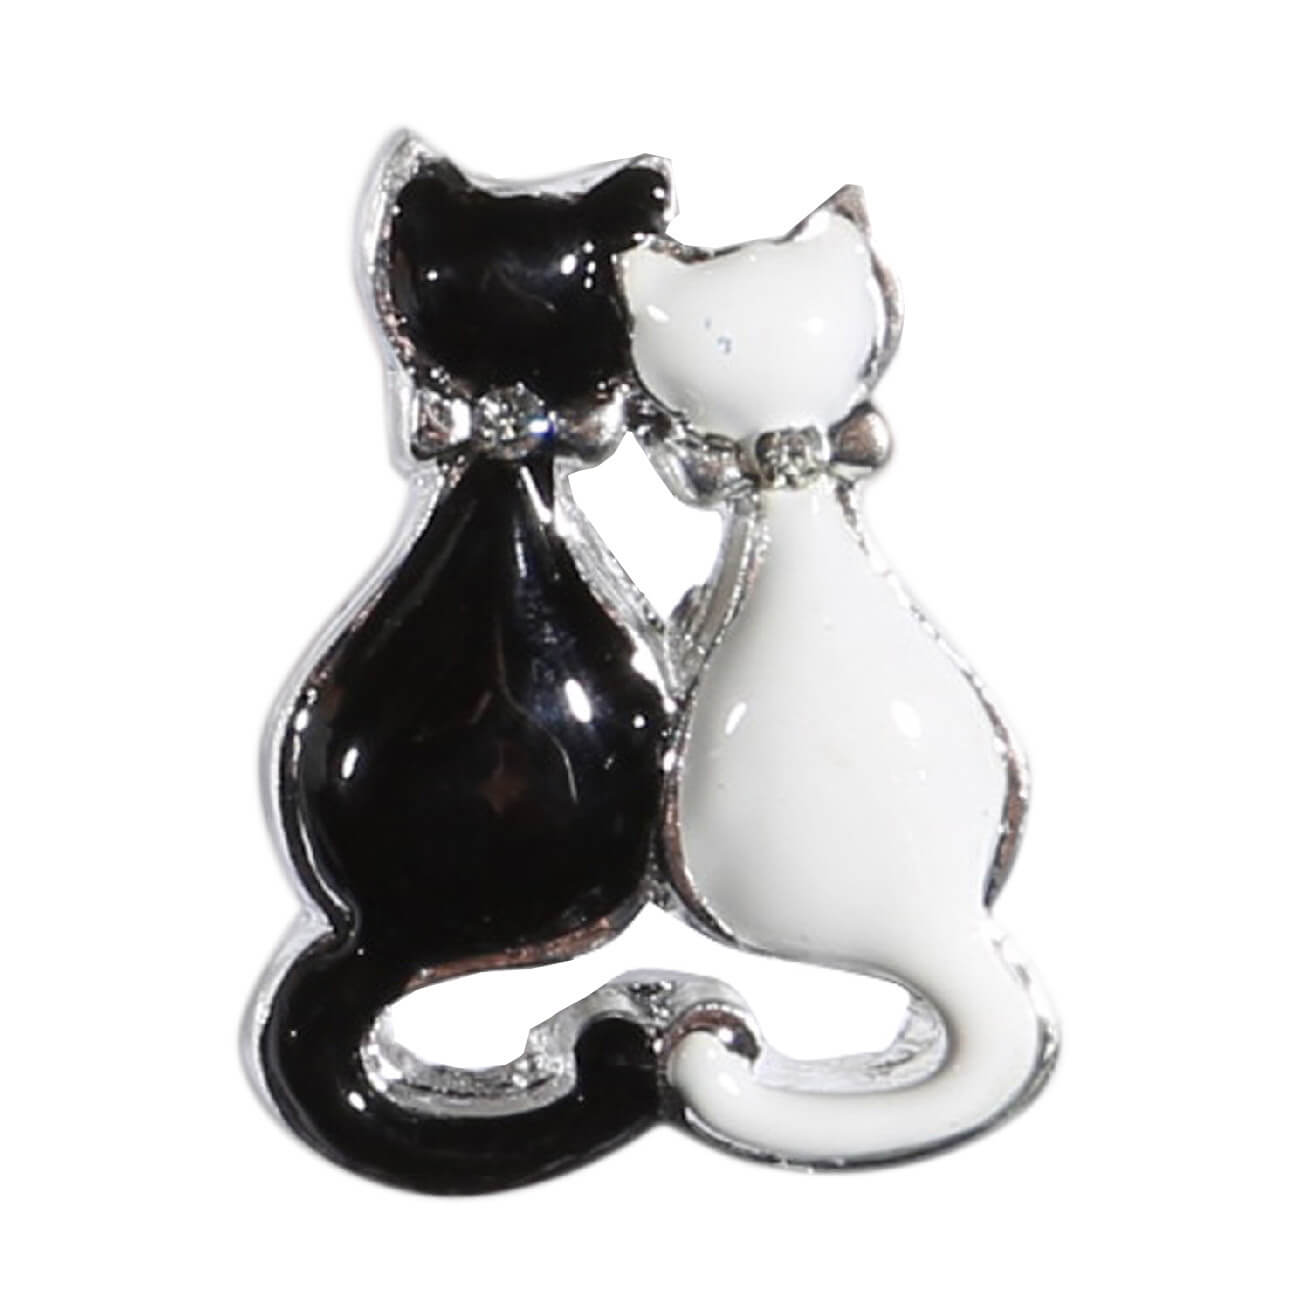 Магнит, 4 см, полирезин, черно/белый, Коты, Cat магнит 4 см полирезин черно белый коты cat